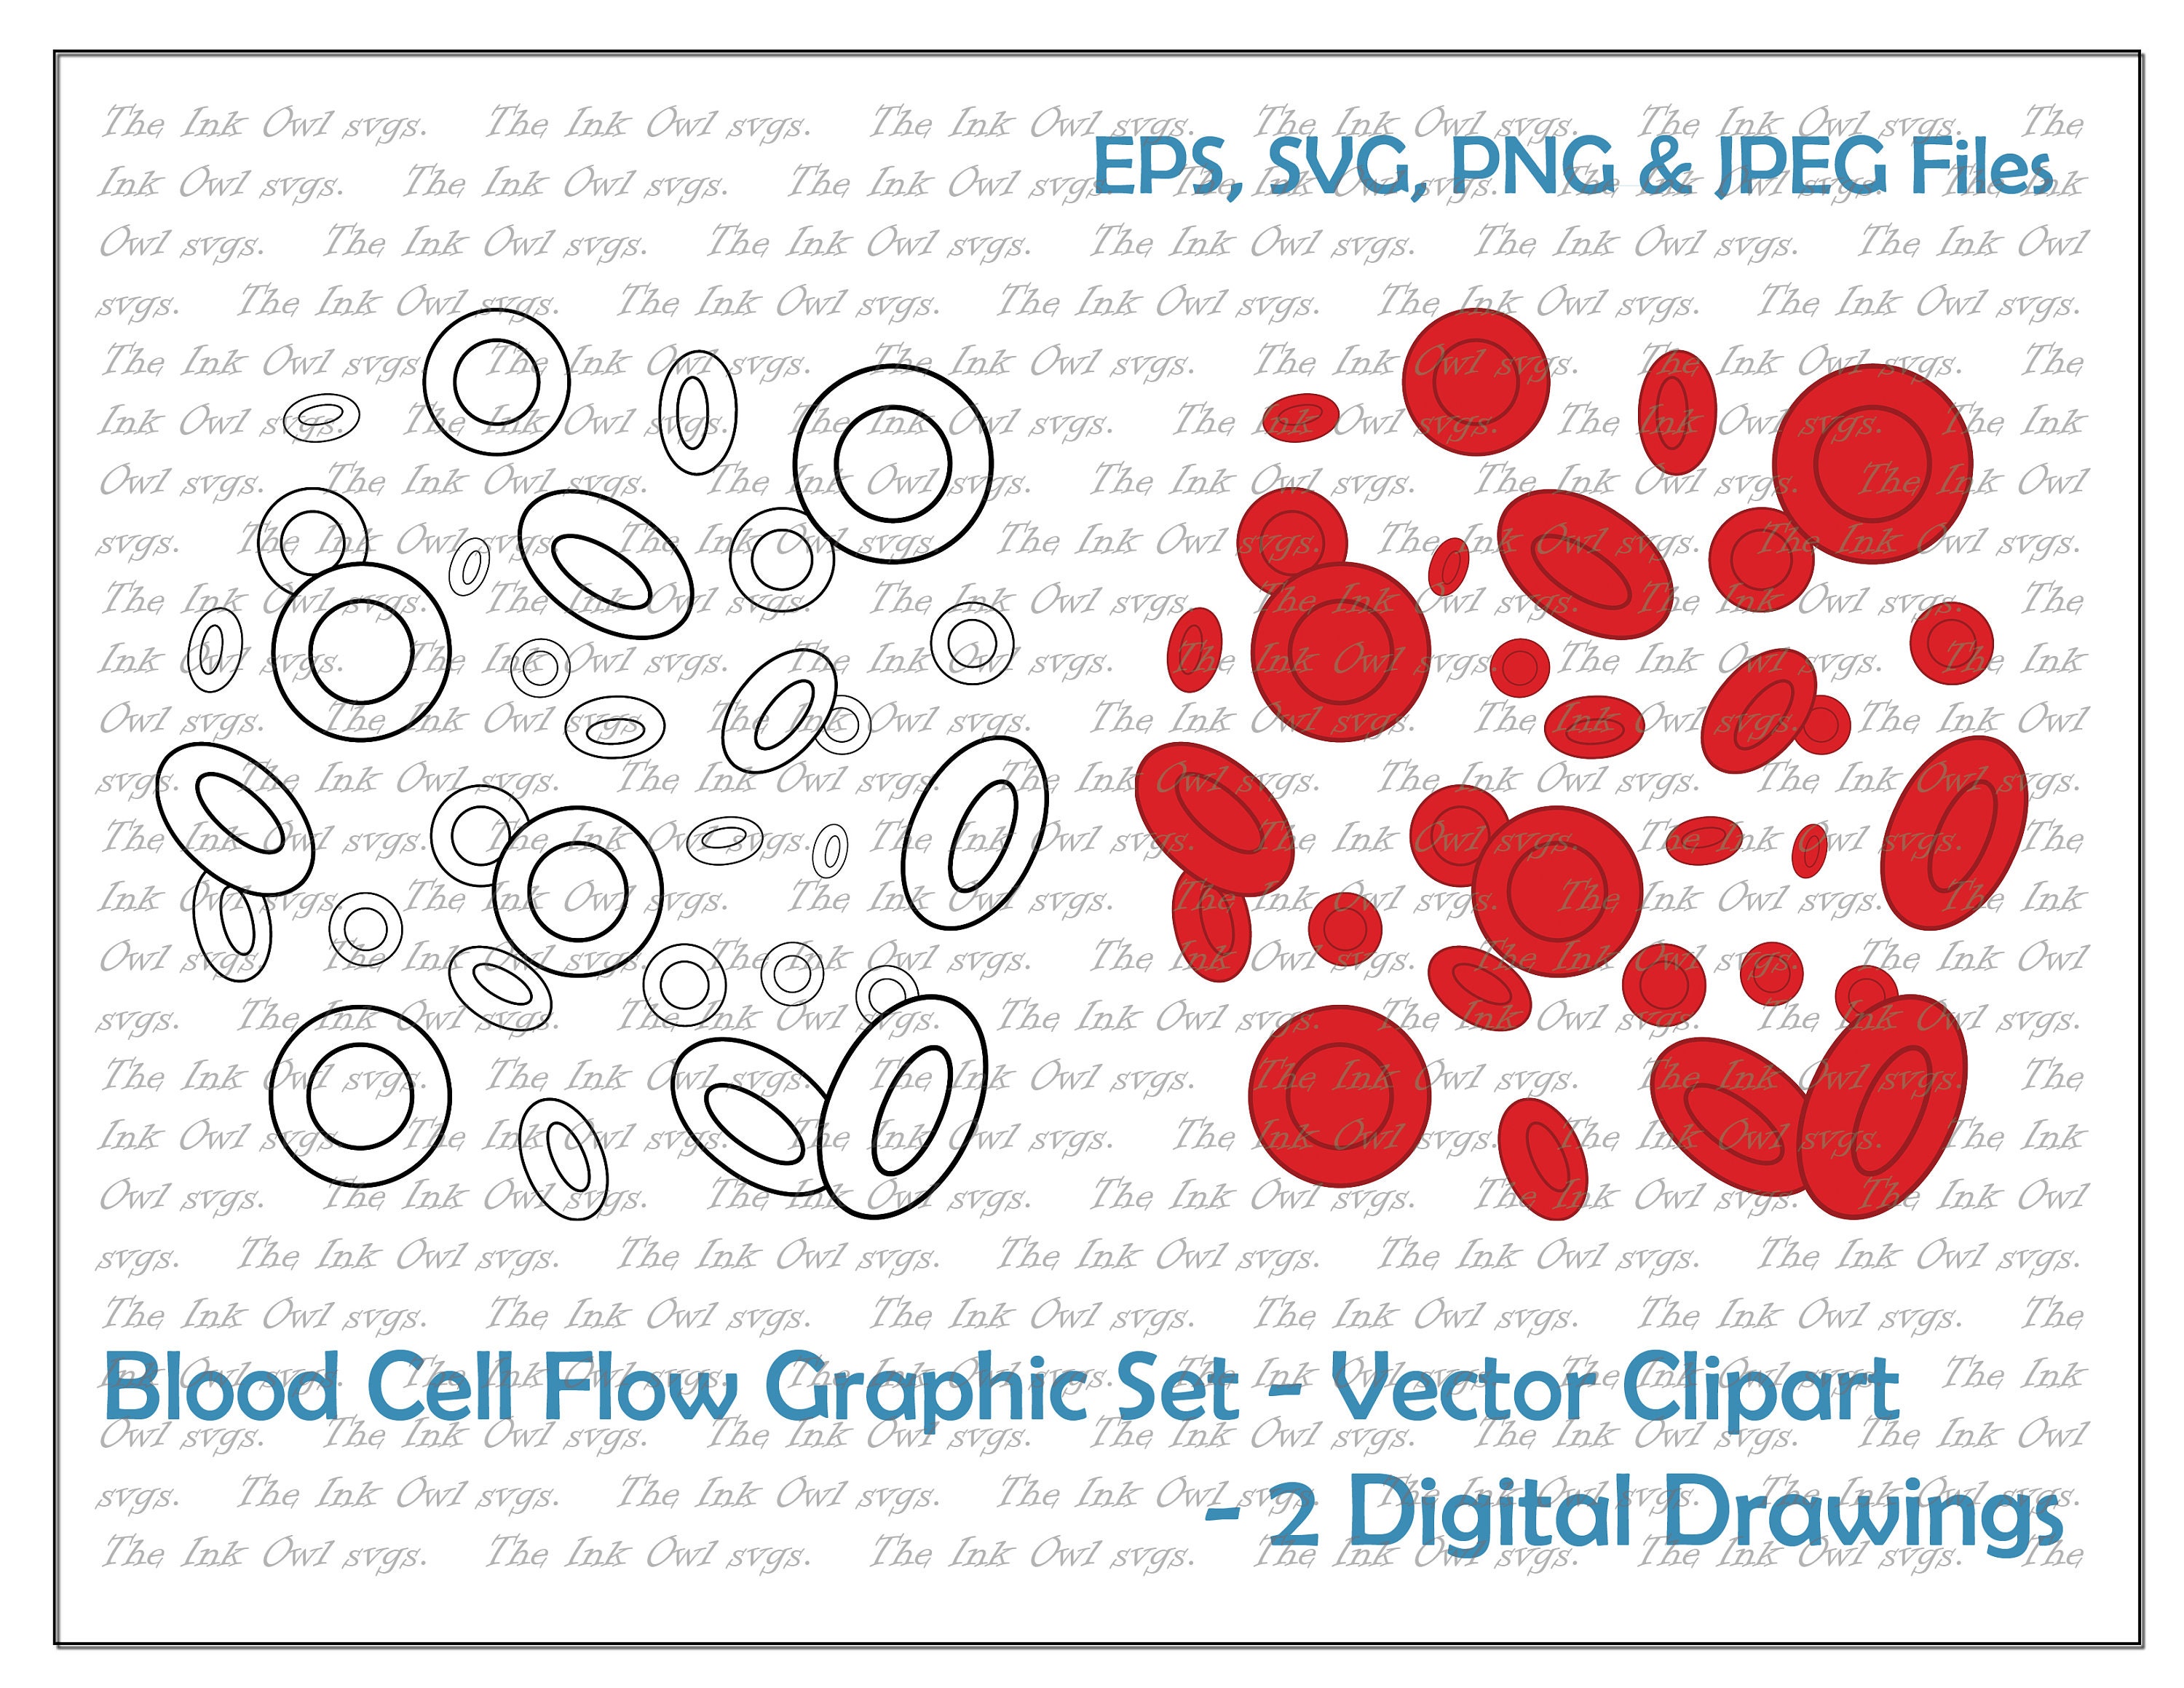 Share more than 127 red blood cell drawing super hot - vietkidsiq.edu.vn